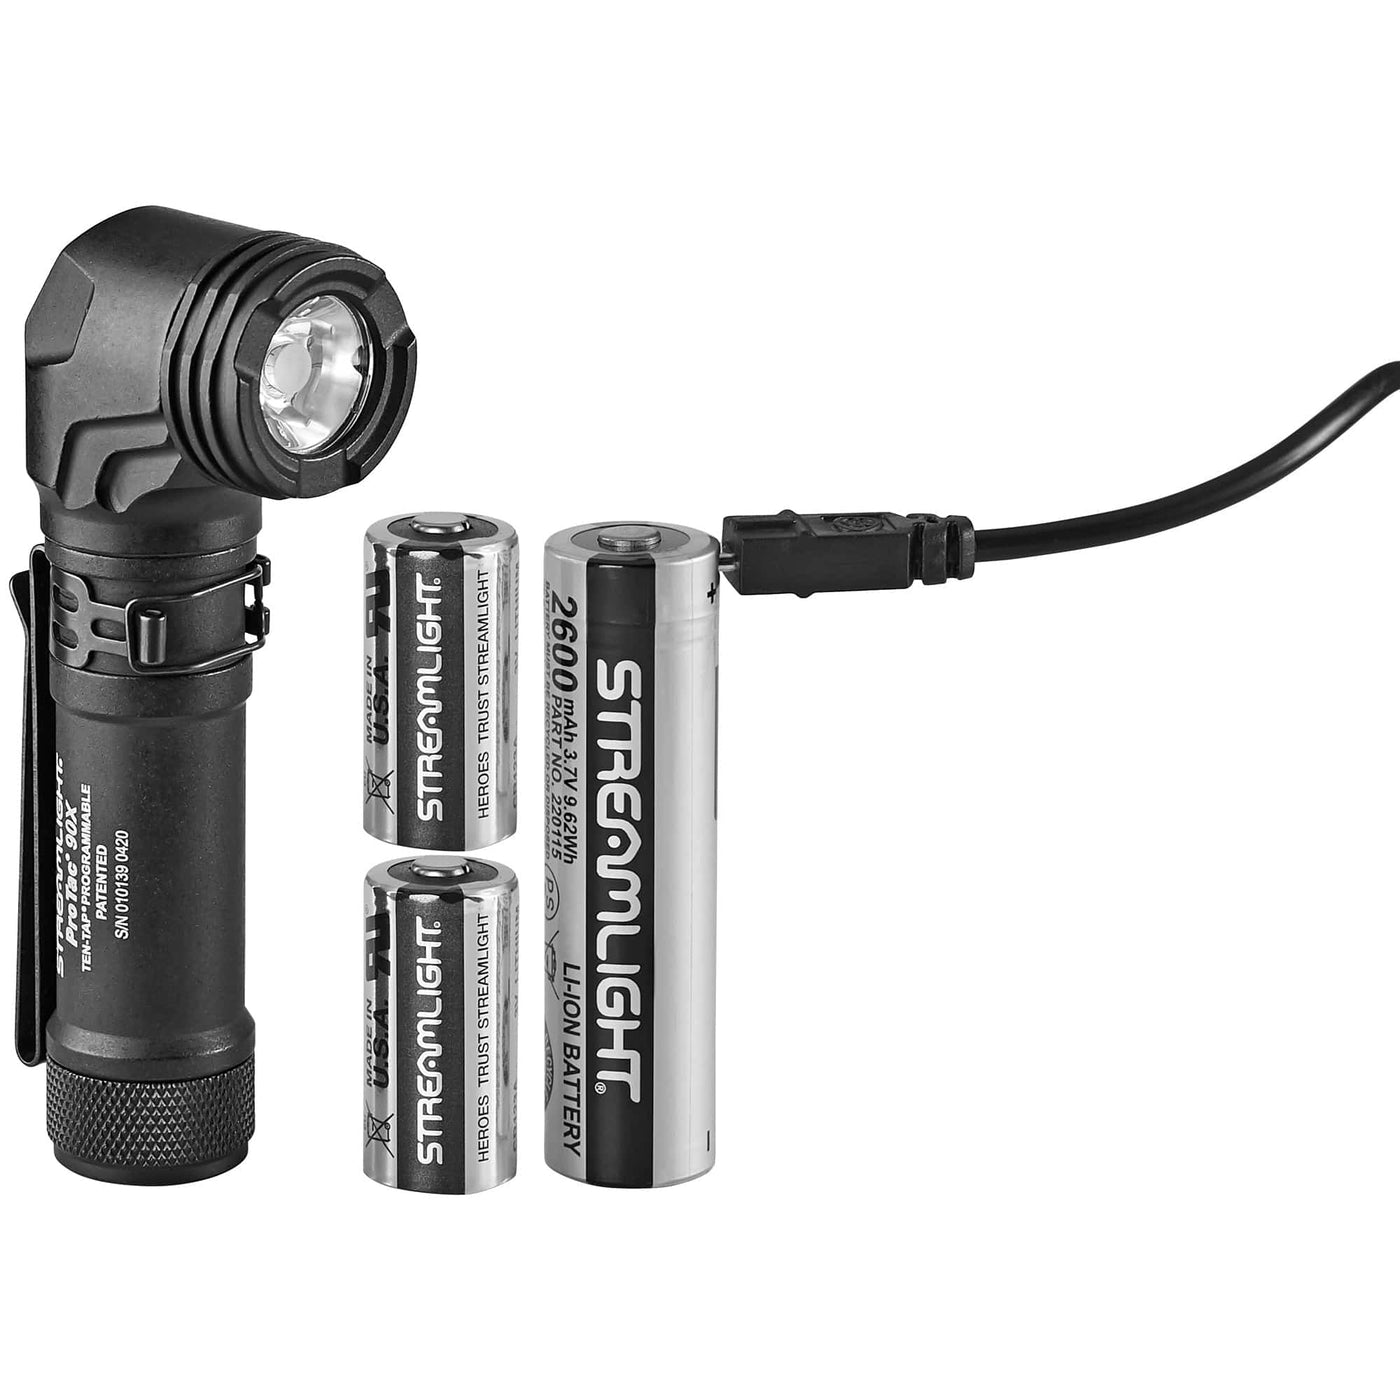 Streamlight Strmlght Protac 90x Usb 1000lum Flashlights & Batteries